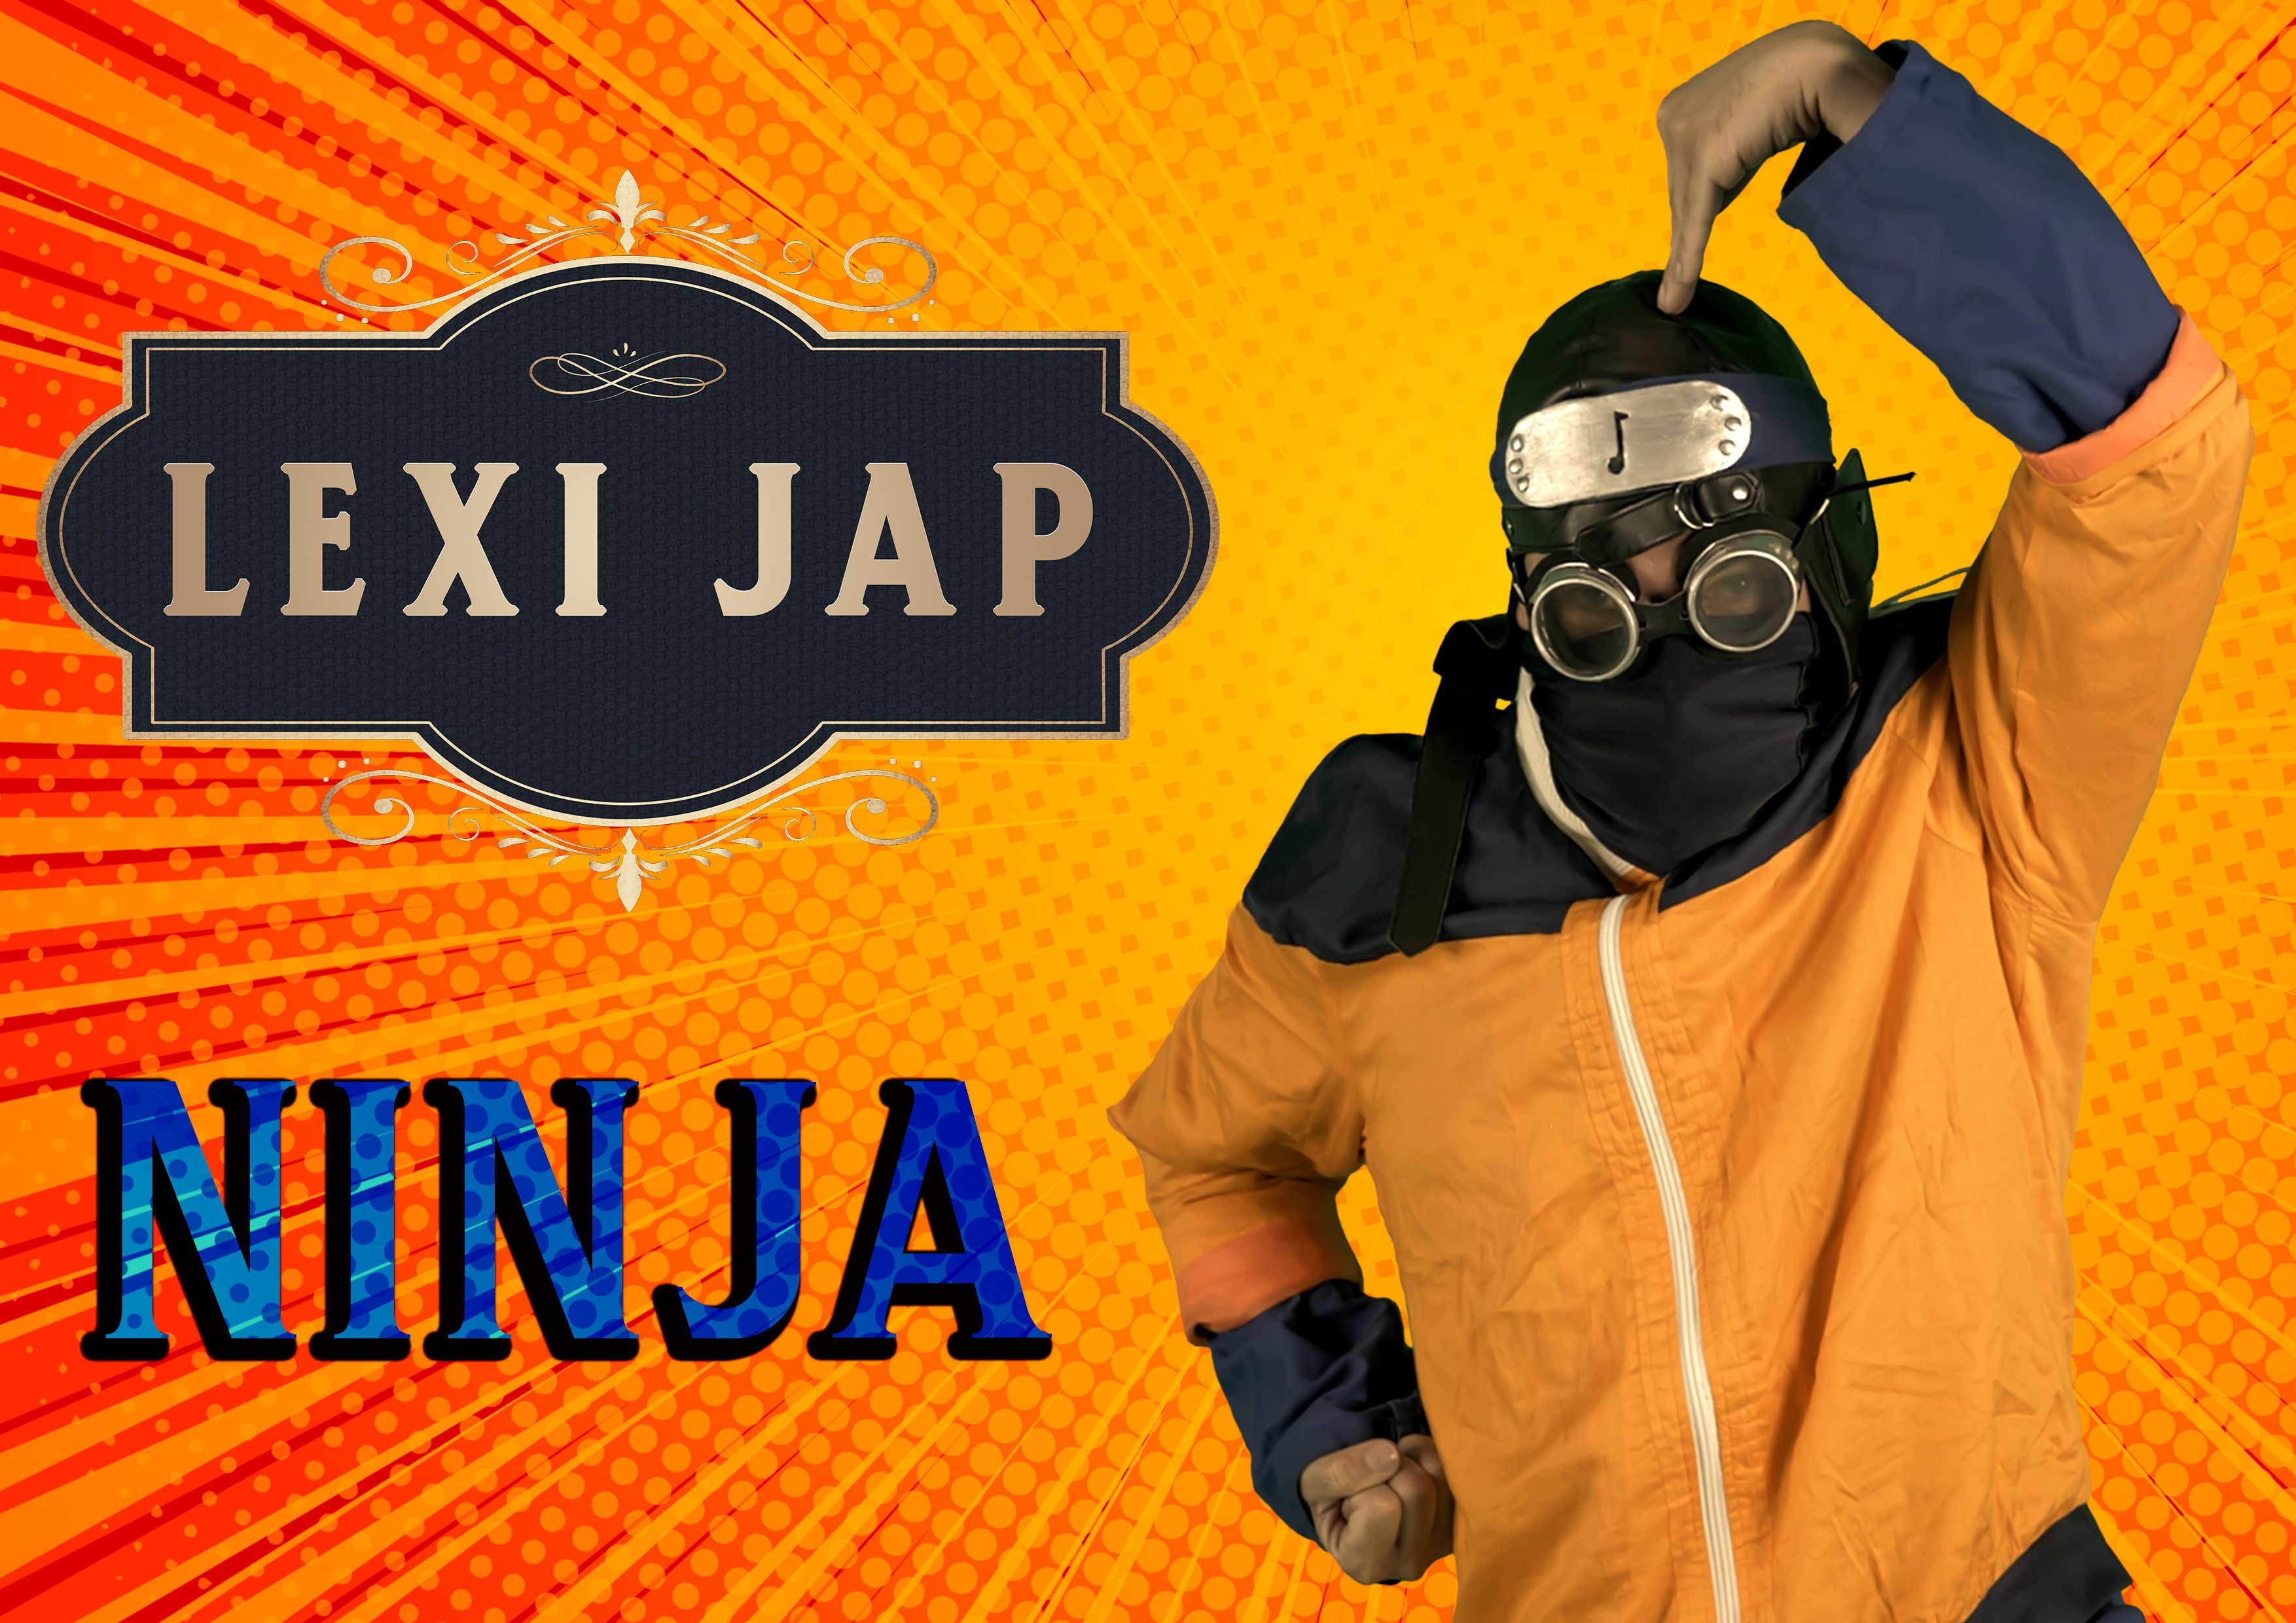 LexiJap-Ninja.jpg